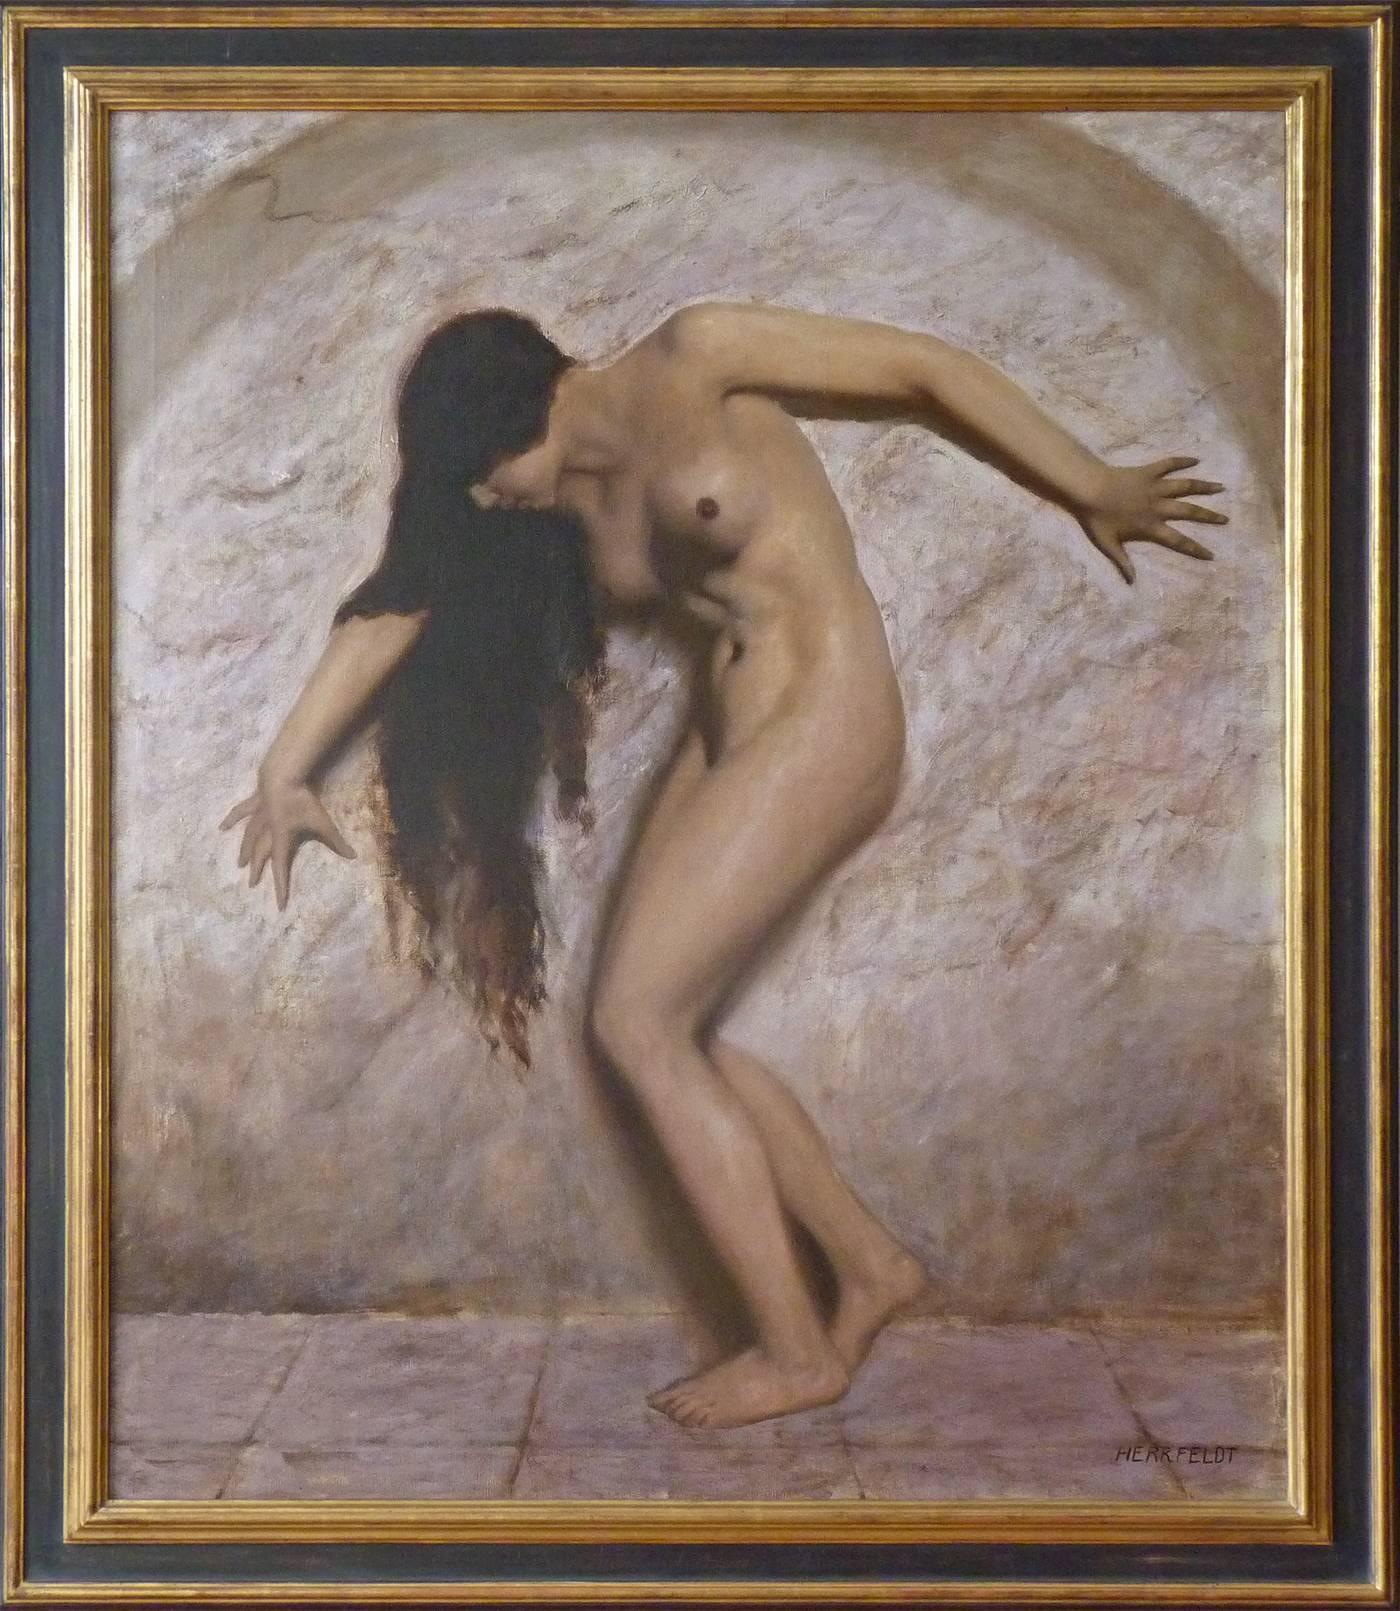 Marcel Rene Herrfeldt Nude Painting - The Slave Girl, masterpiece by Paris born german artist Marcel René Herrfeldt